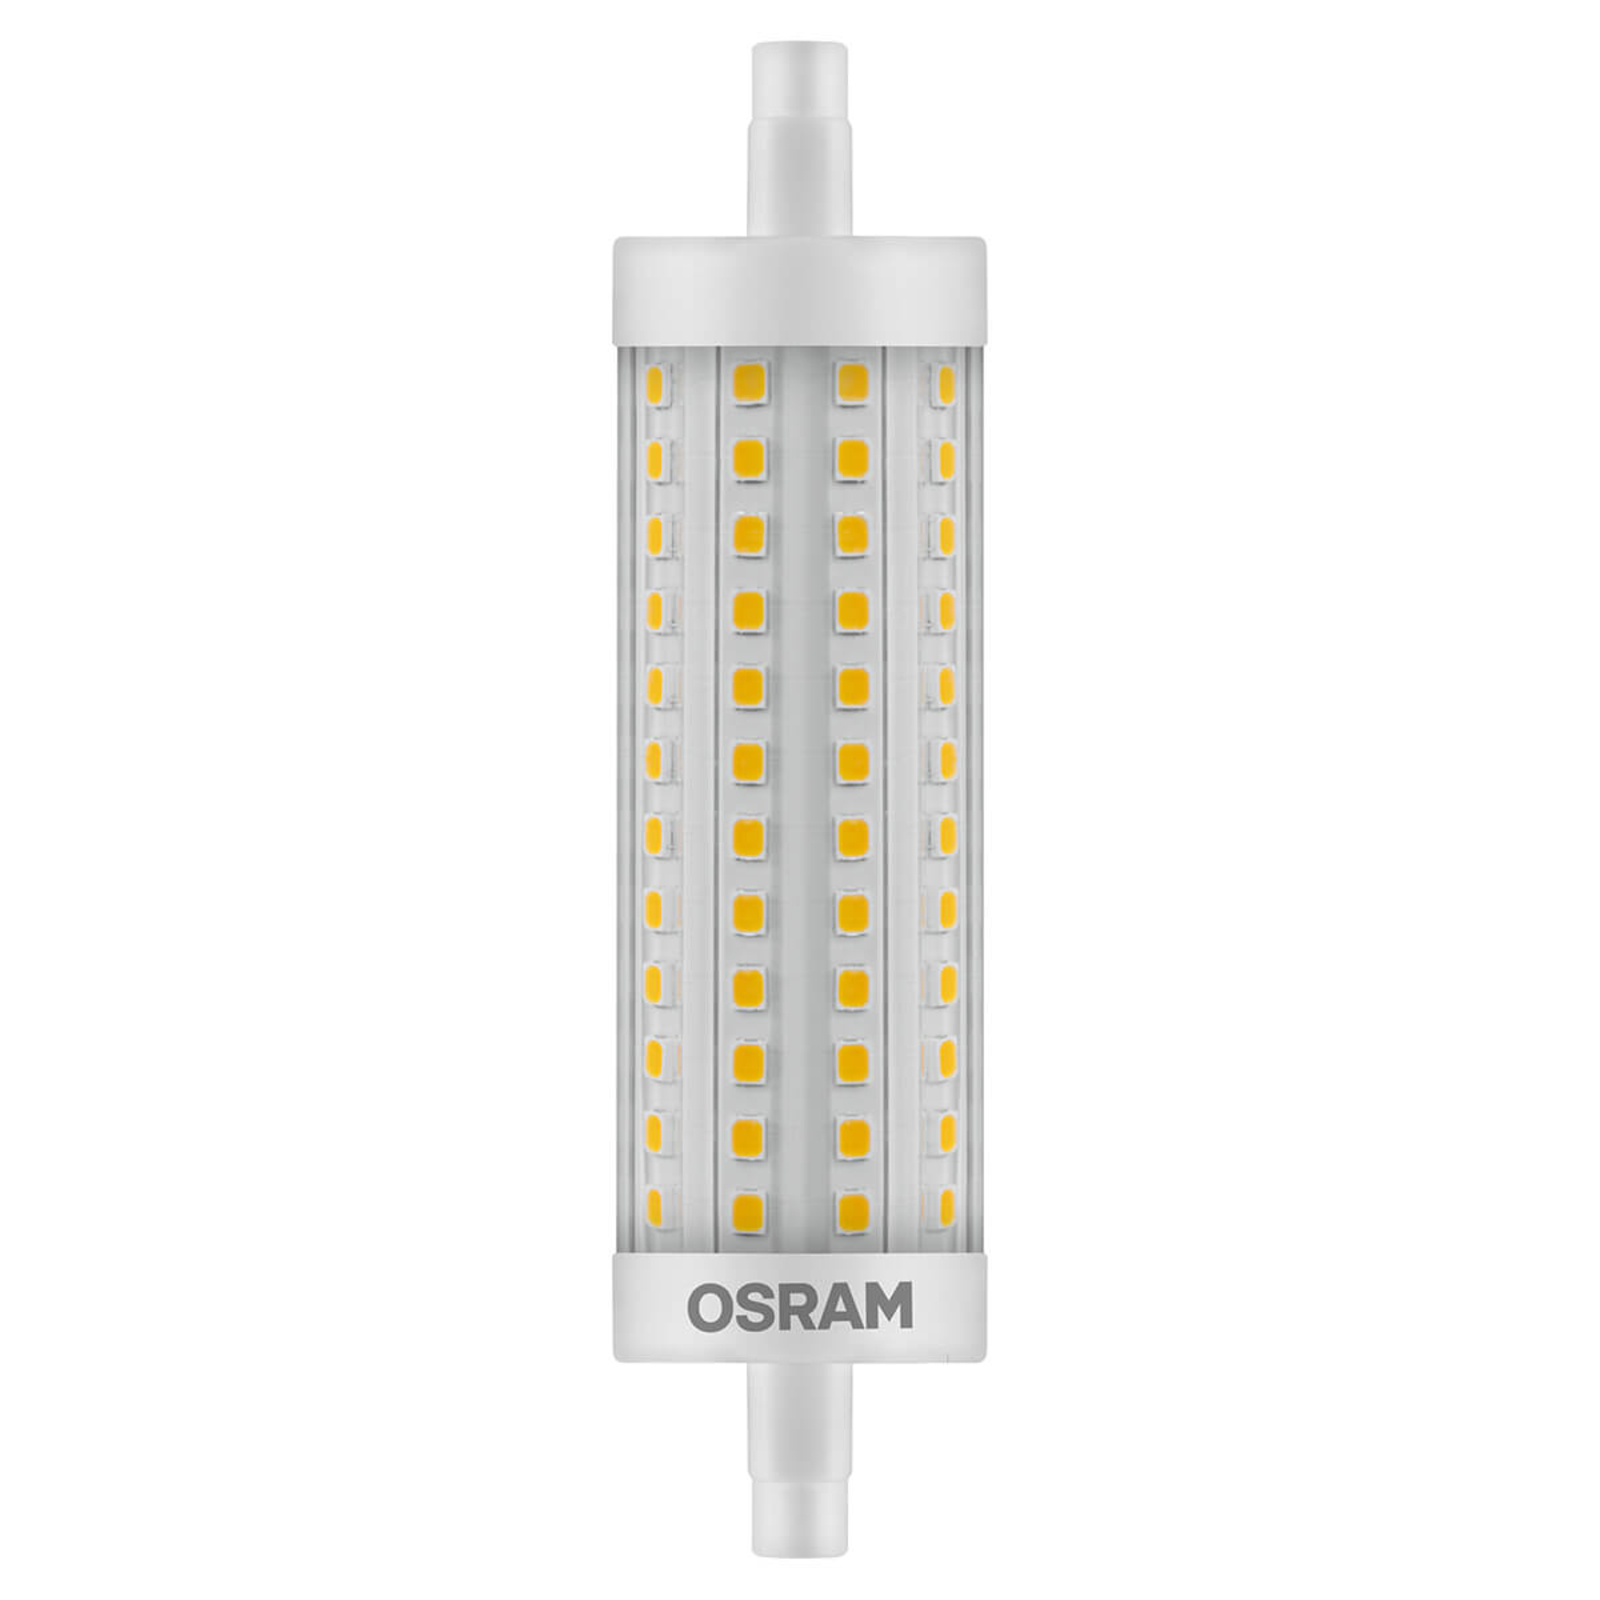 OSRAM LED-stav R7s 16W 11,8 cm 827 dimbar